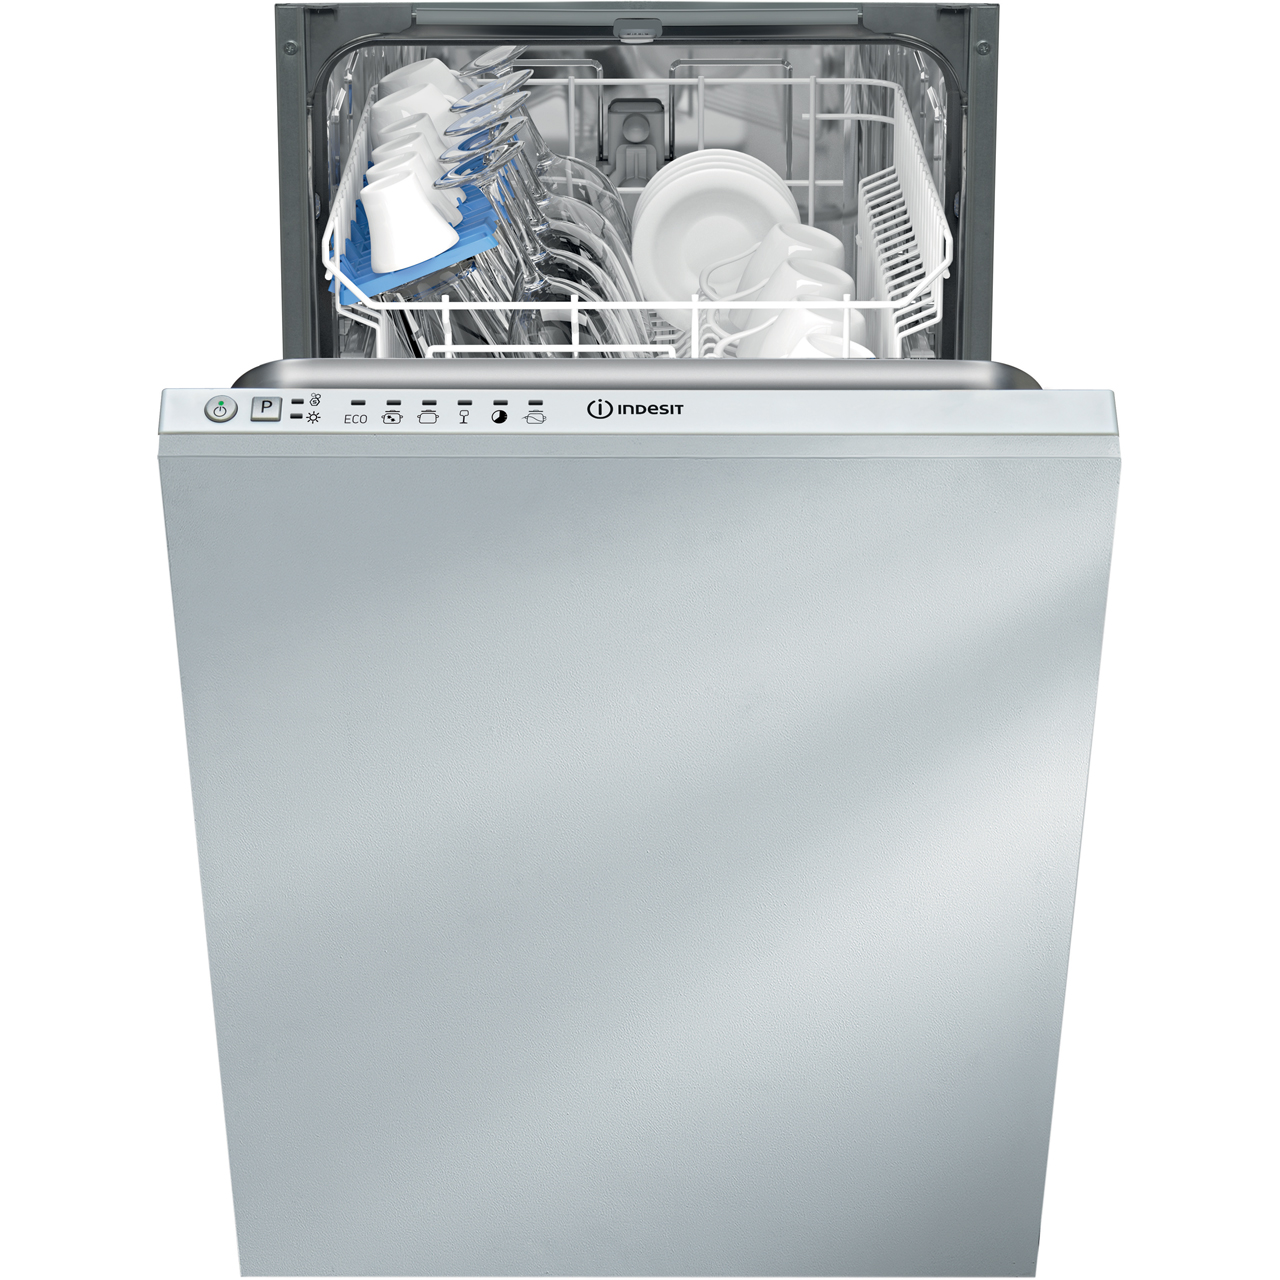 Indesit DISRM16B19 Fully Integrated Slimline Dishwasher Review